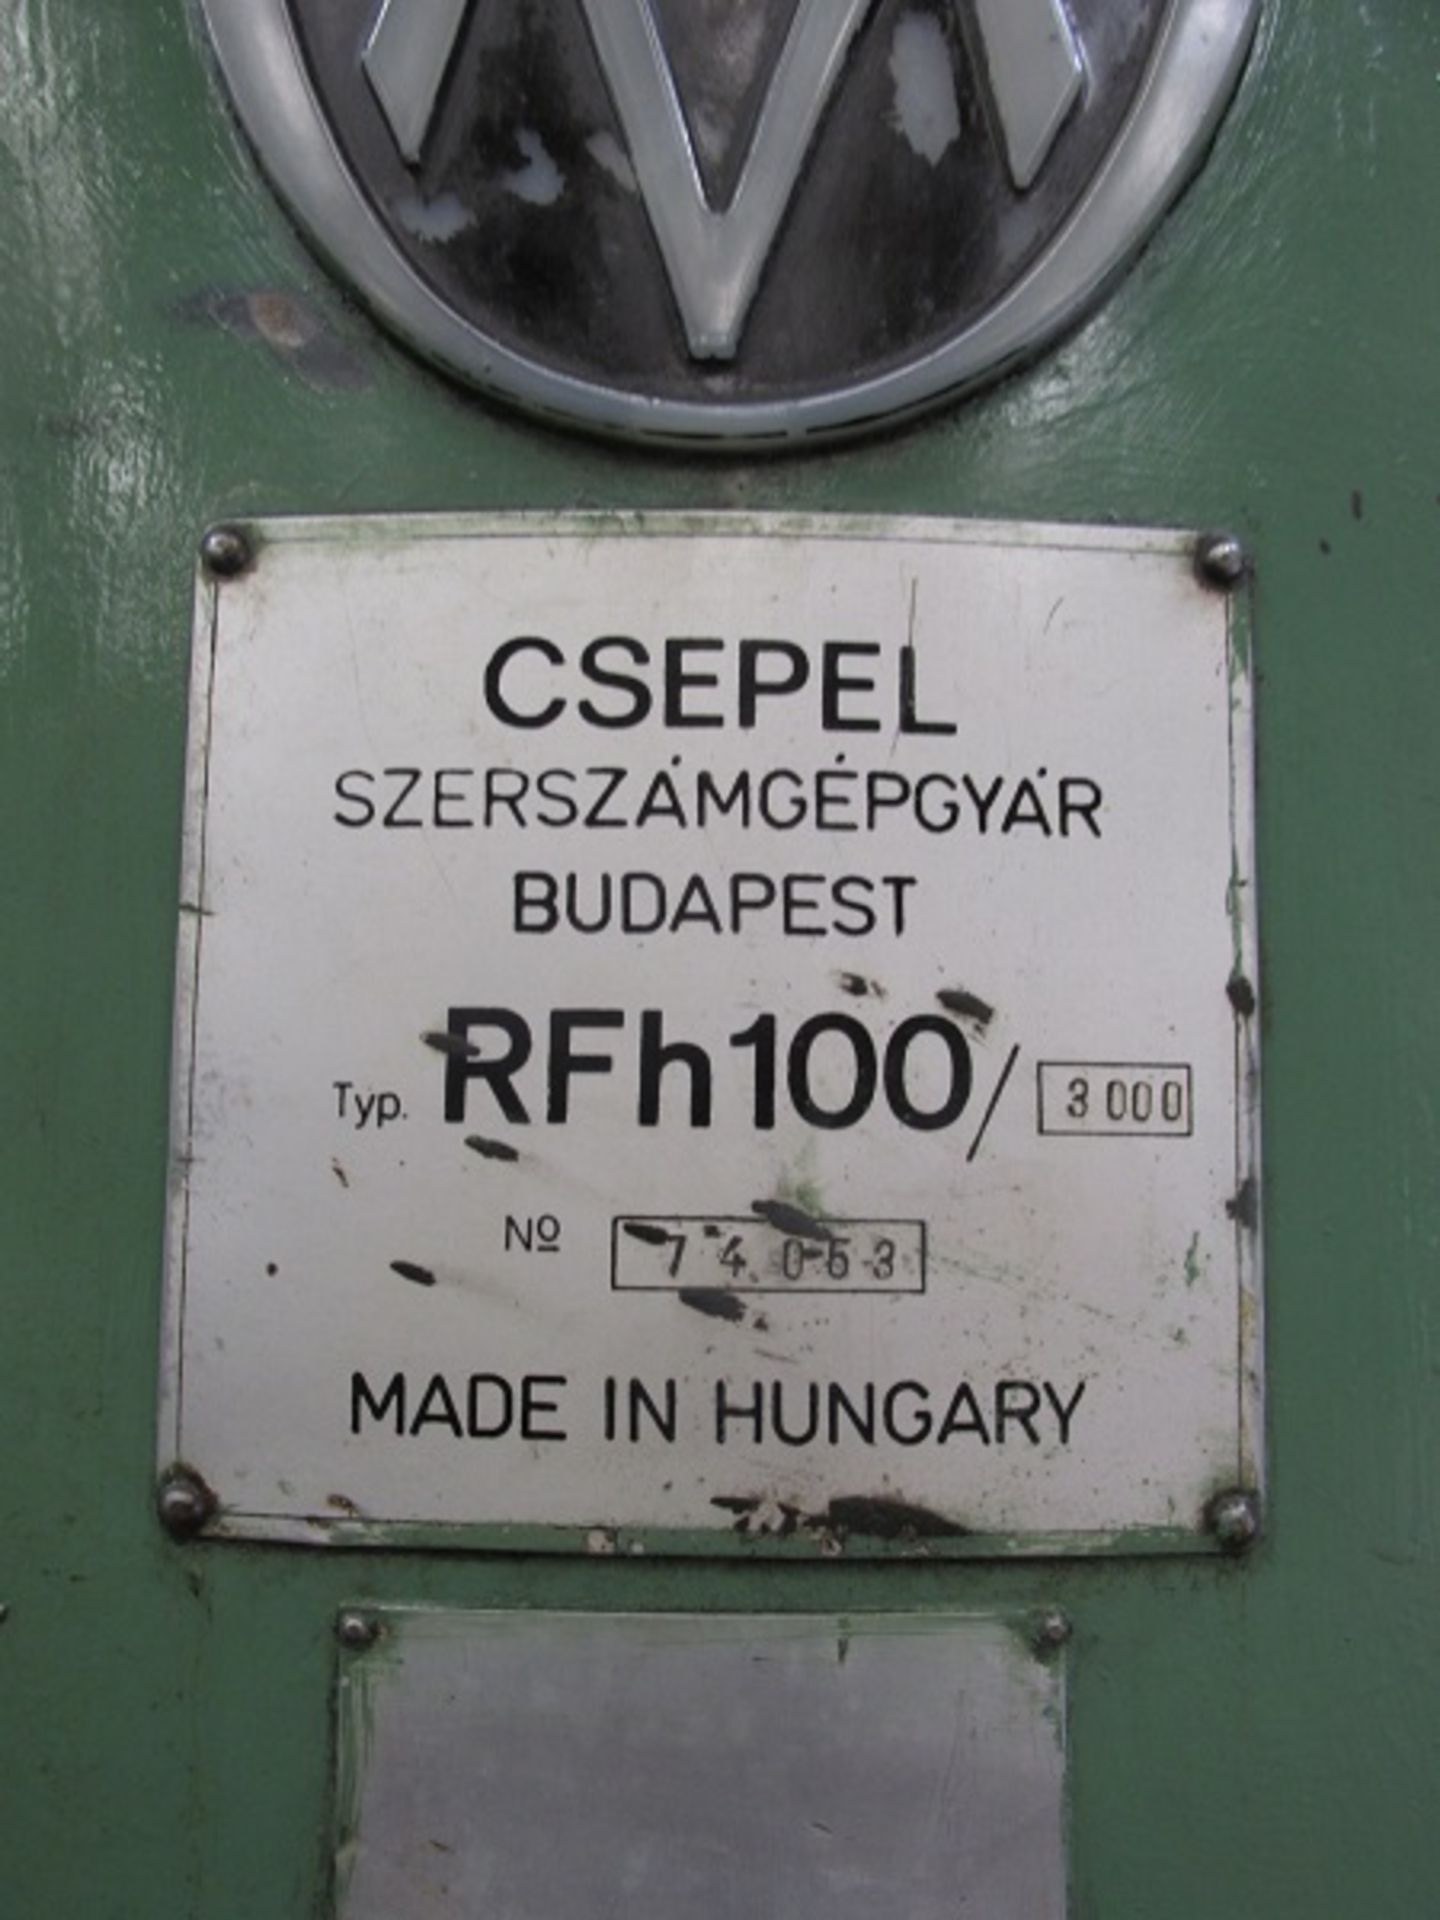 Csepel RHF 100/3000 - 10' Heavy Duty Radial Drill - Image 3 of 8